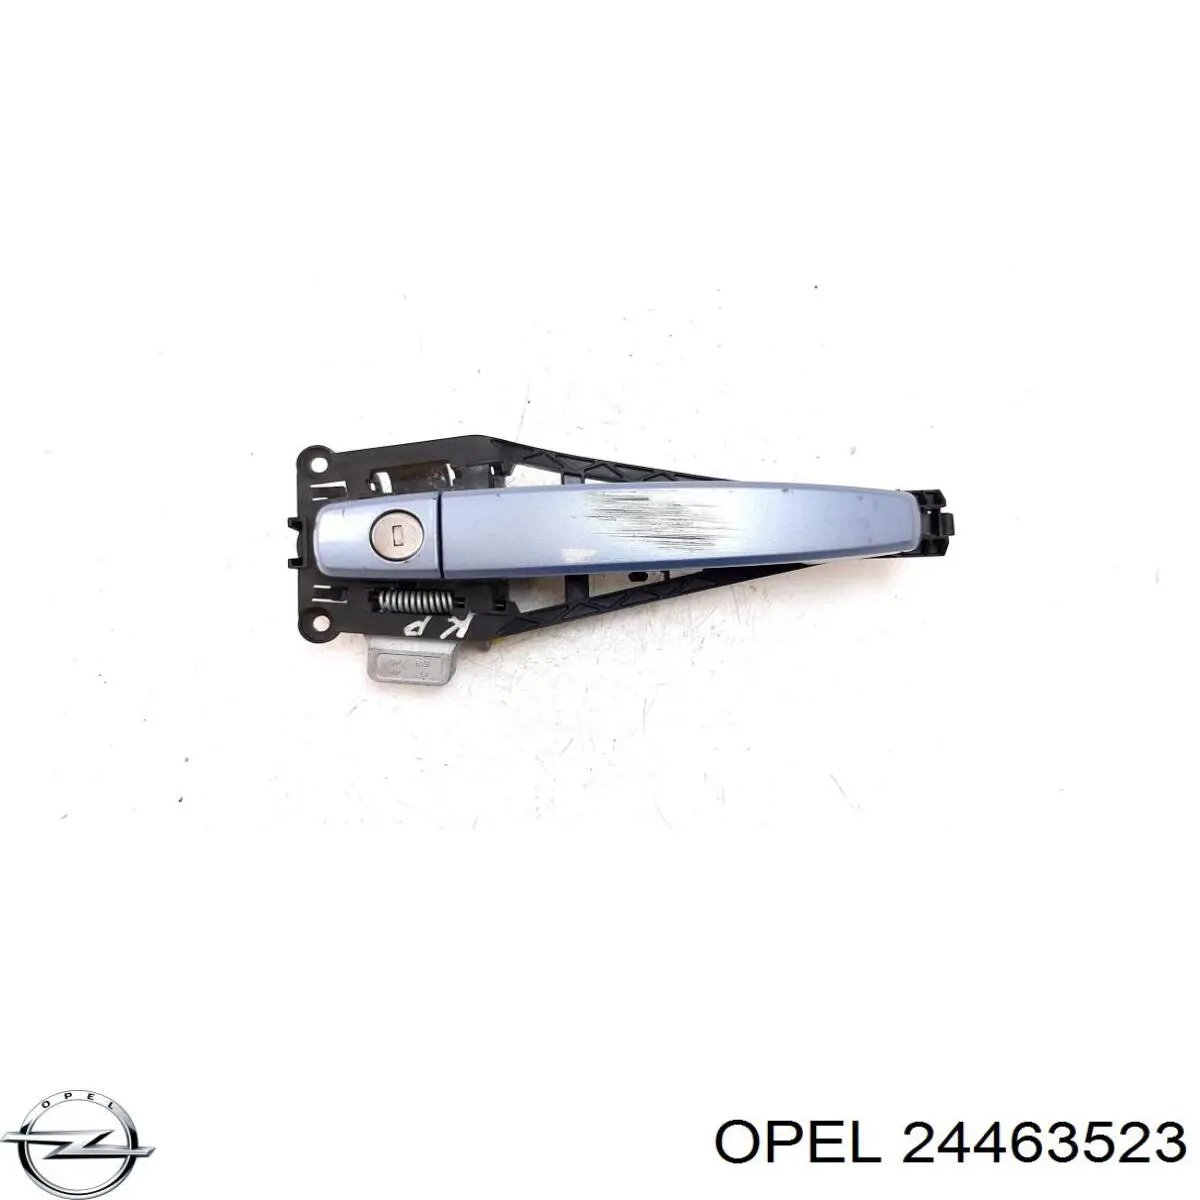 24463523 Opel casquillo de barra estabilizadora delantera